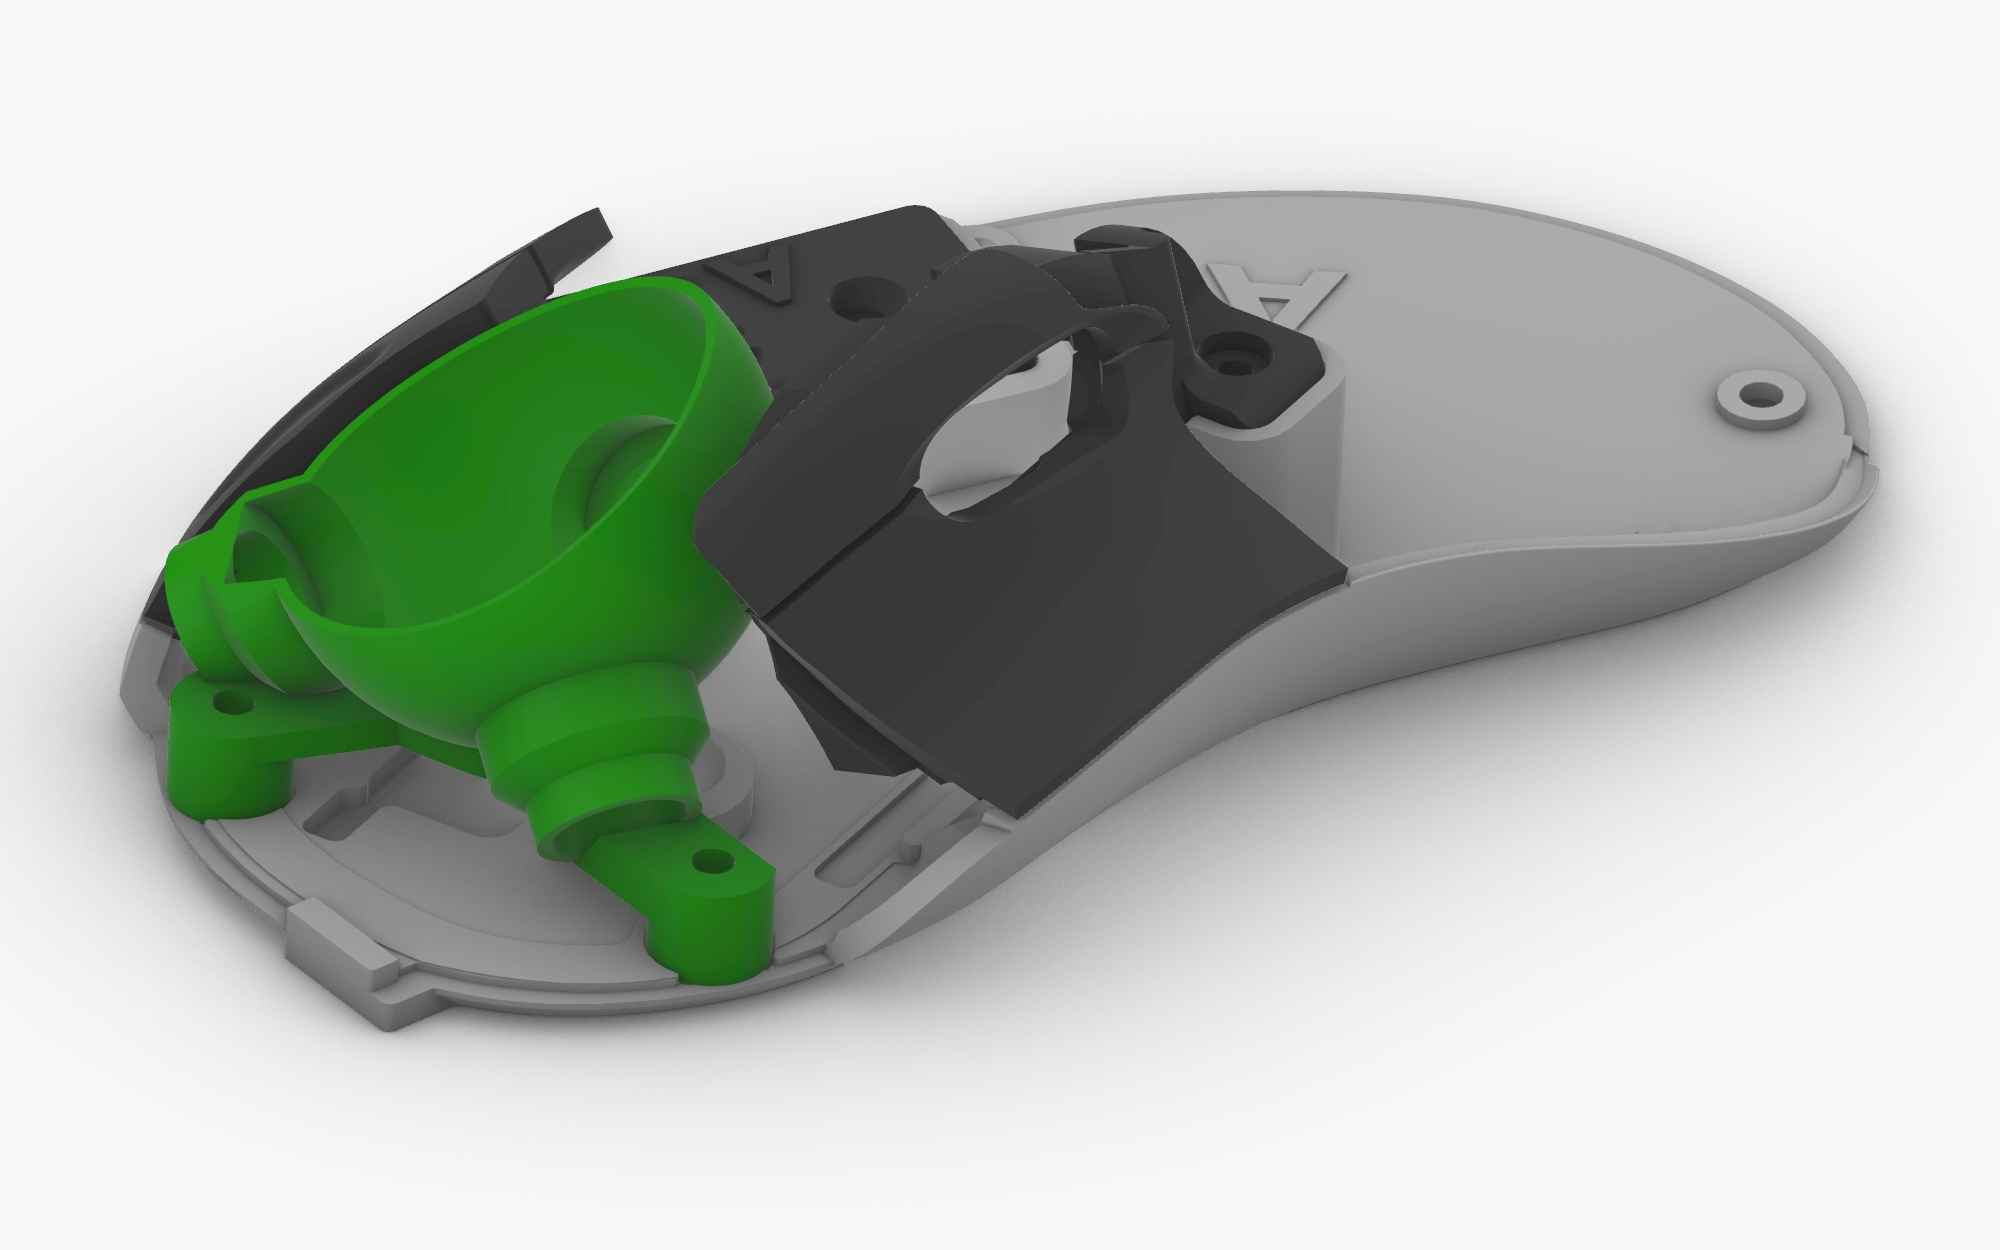 Screenshot of Rhino showing model of BTU holder in trackball